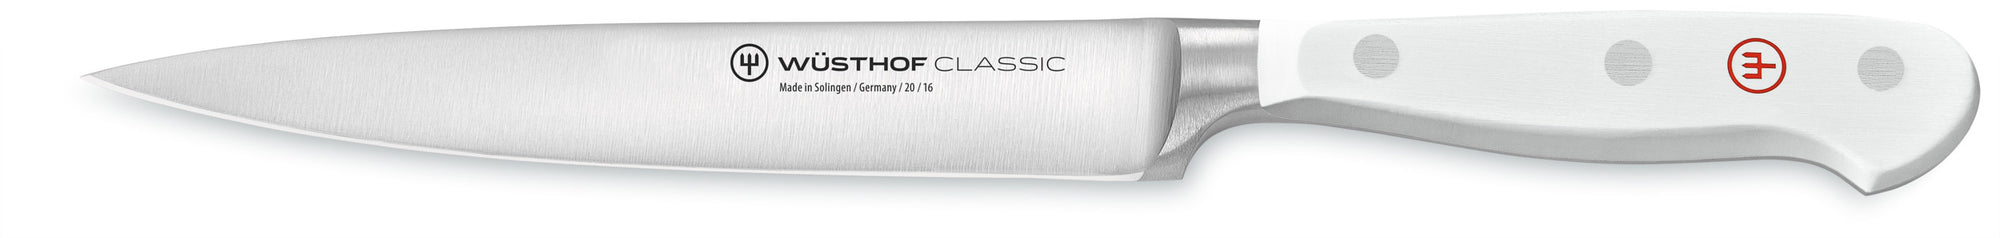 Wusthof Classic White Sandwich / Utility Knife, 6-inch (16 cm) 1040200716 Canada